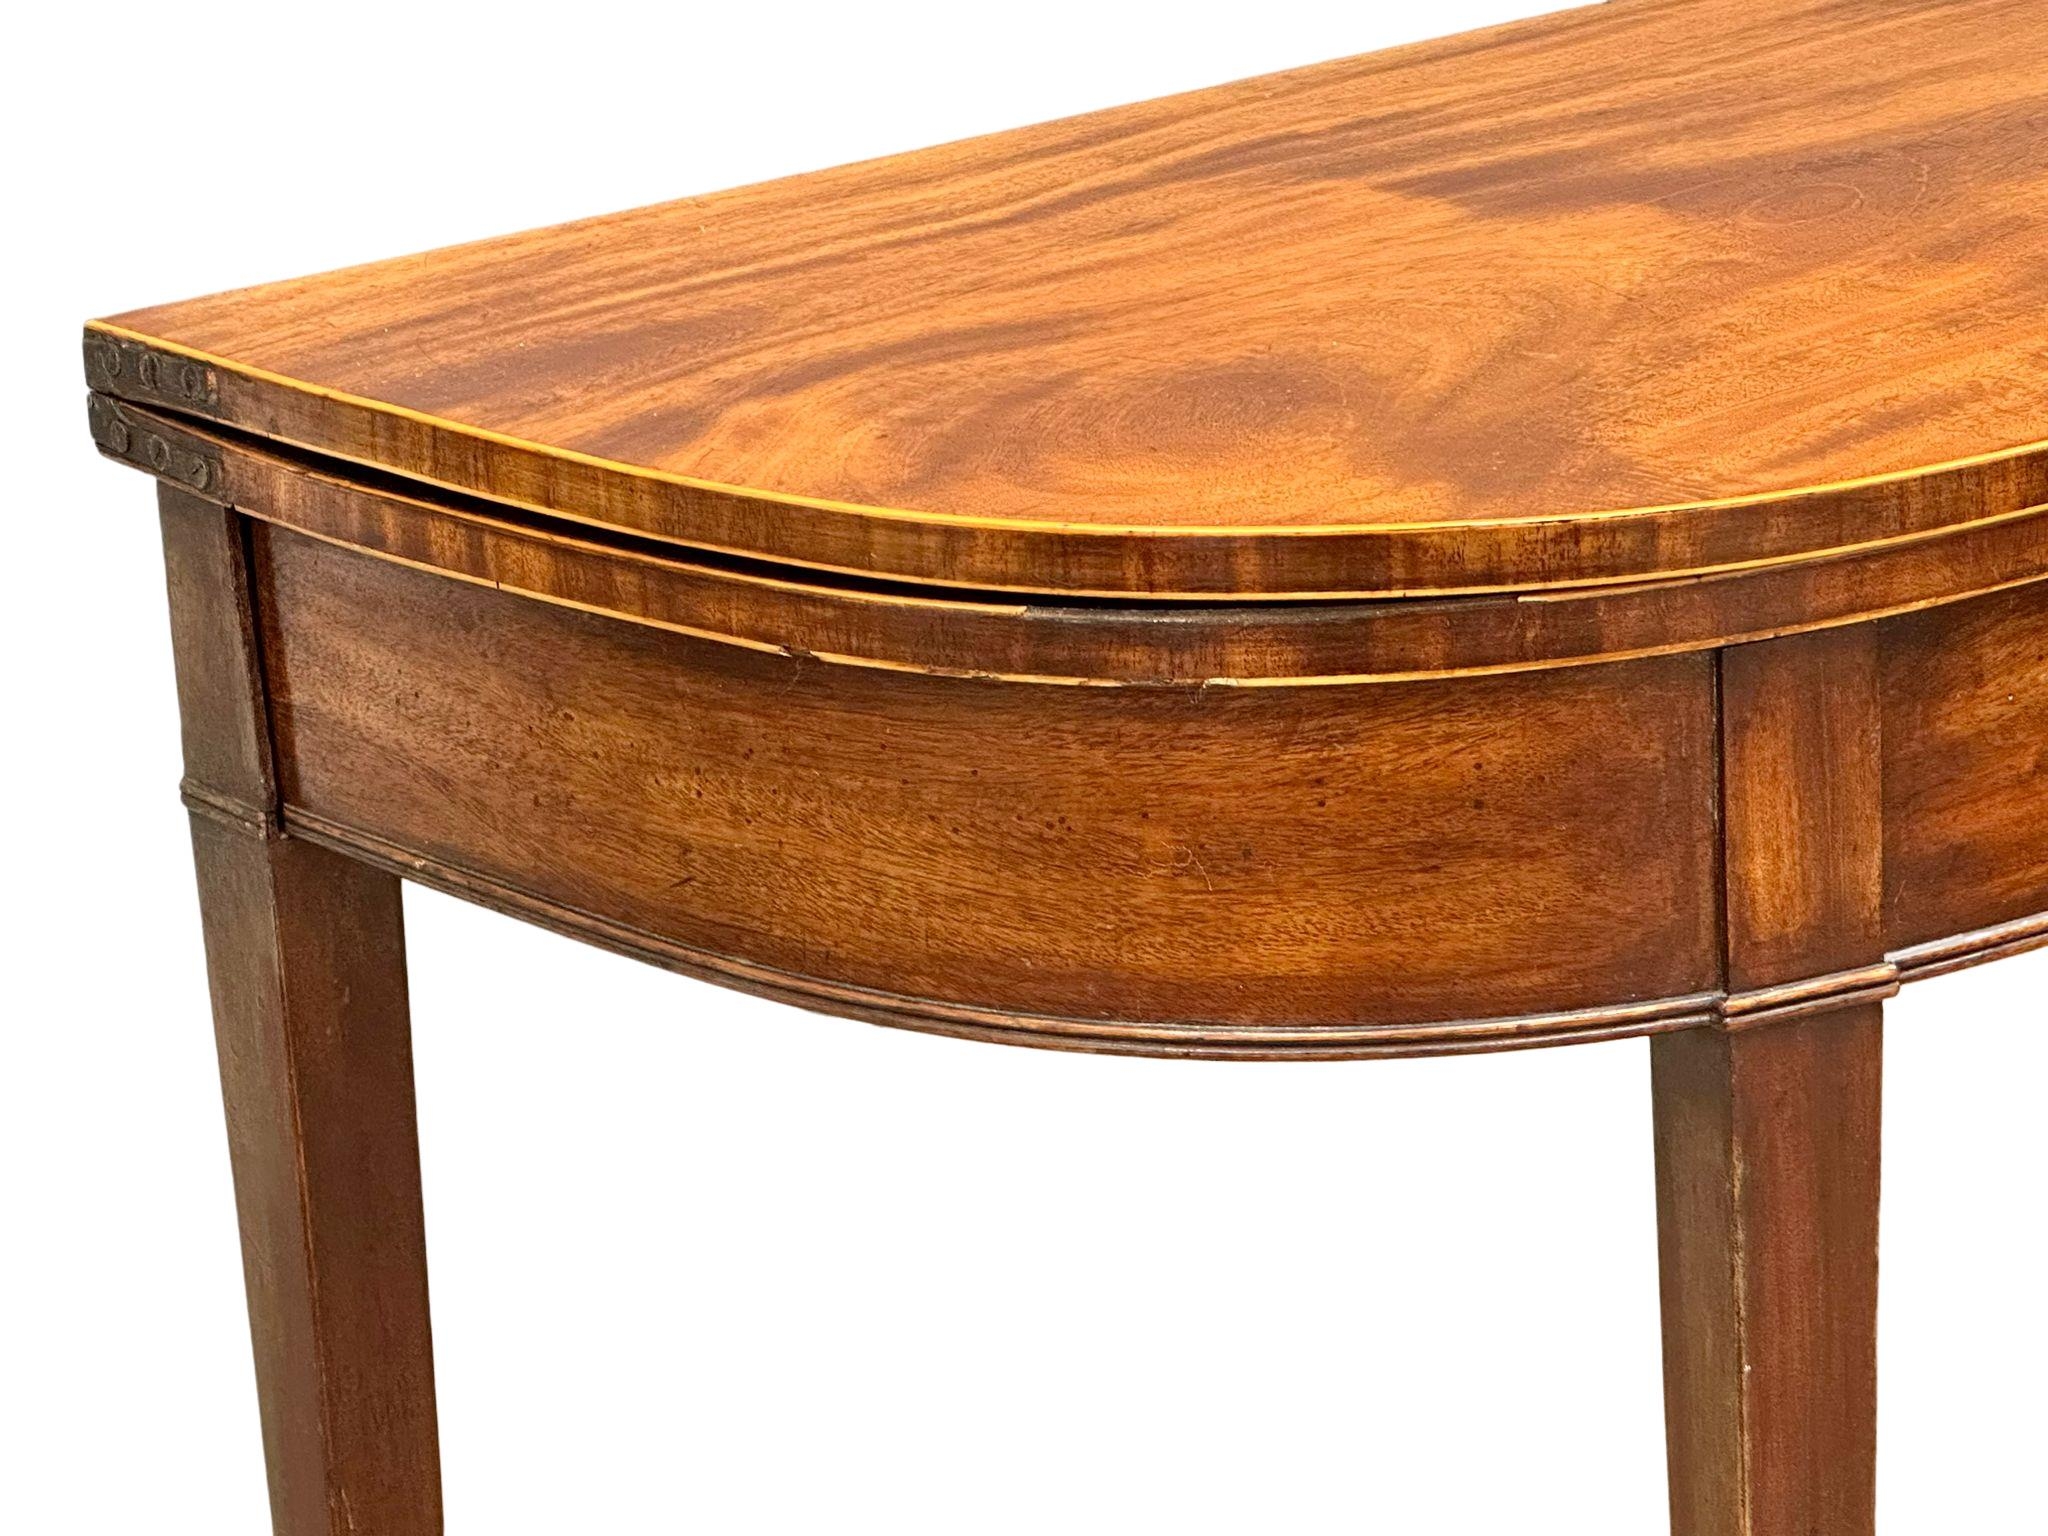 A George III inlaid mahogany turnover tea table. Circa 1800. 91x45.5x73cm - Image 4 of 6